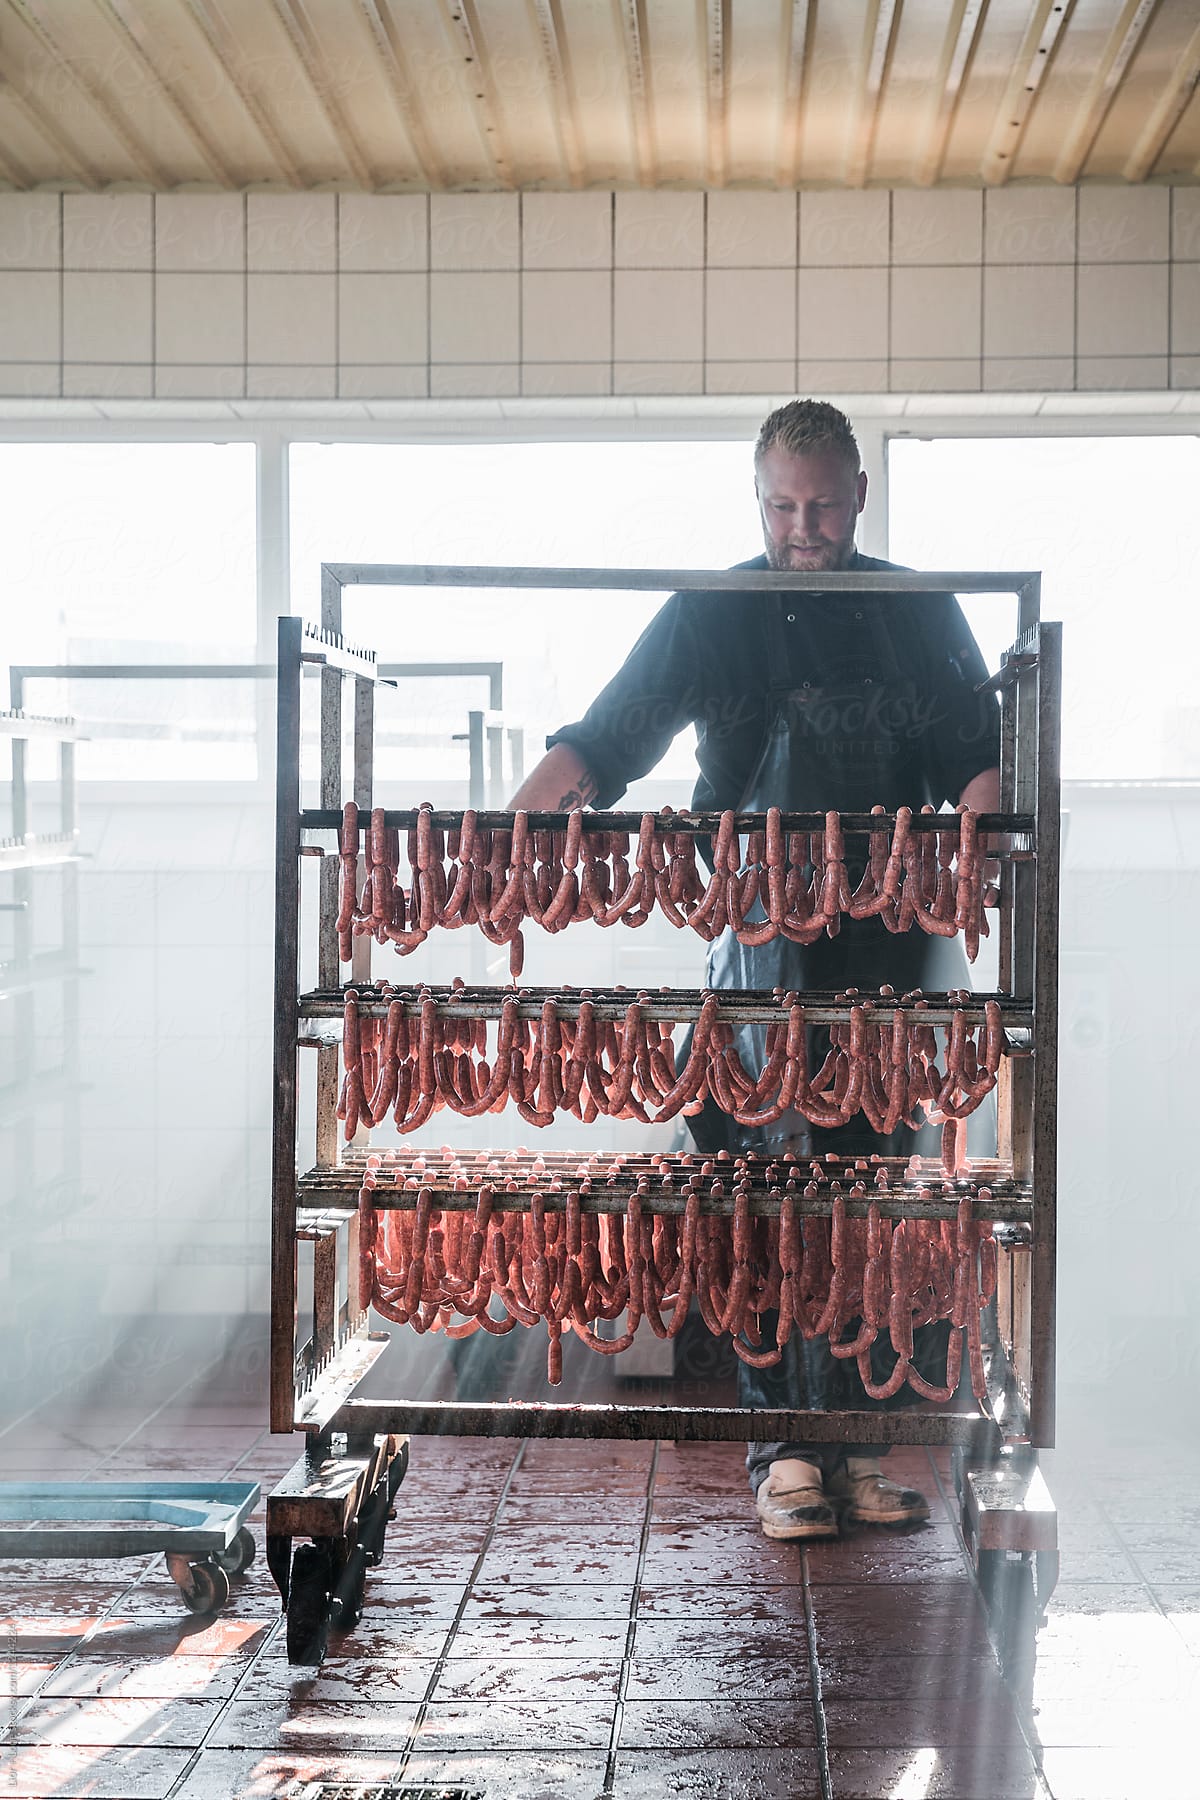 Butcher hanging fresh sausages on a smoking rack